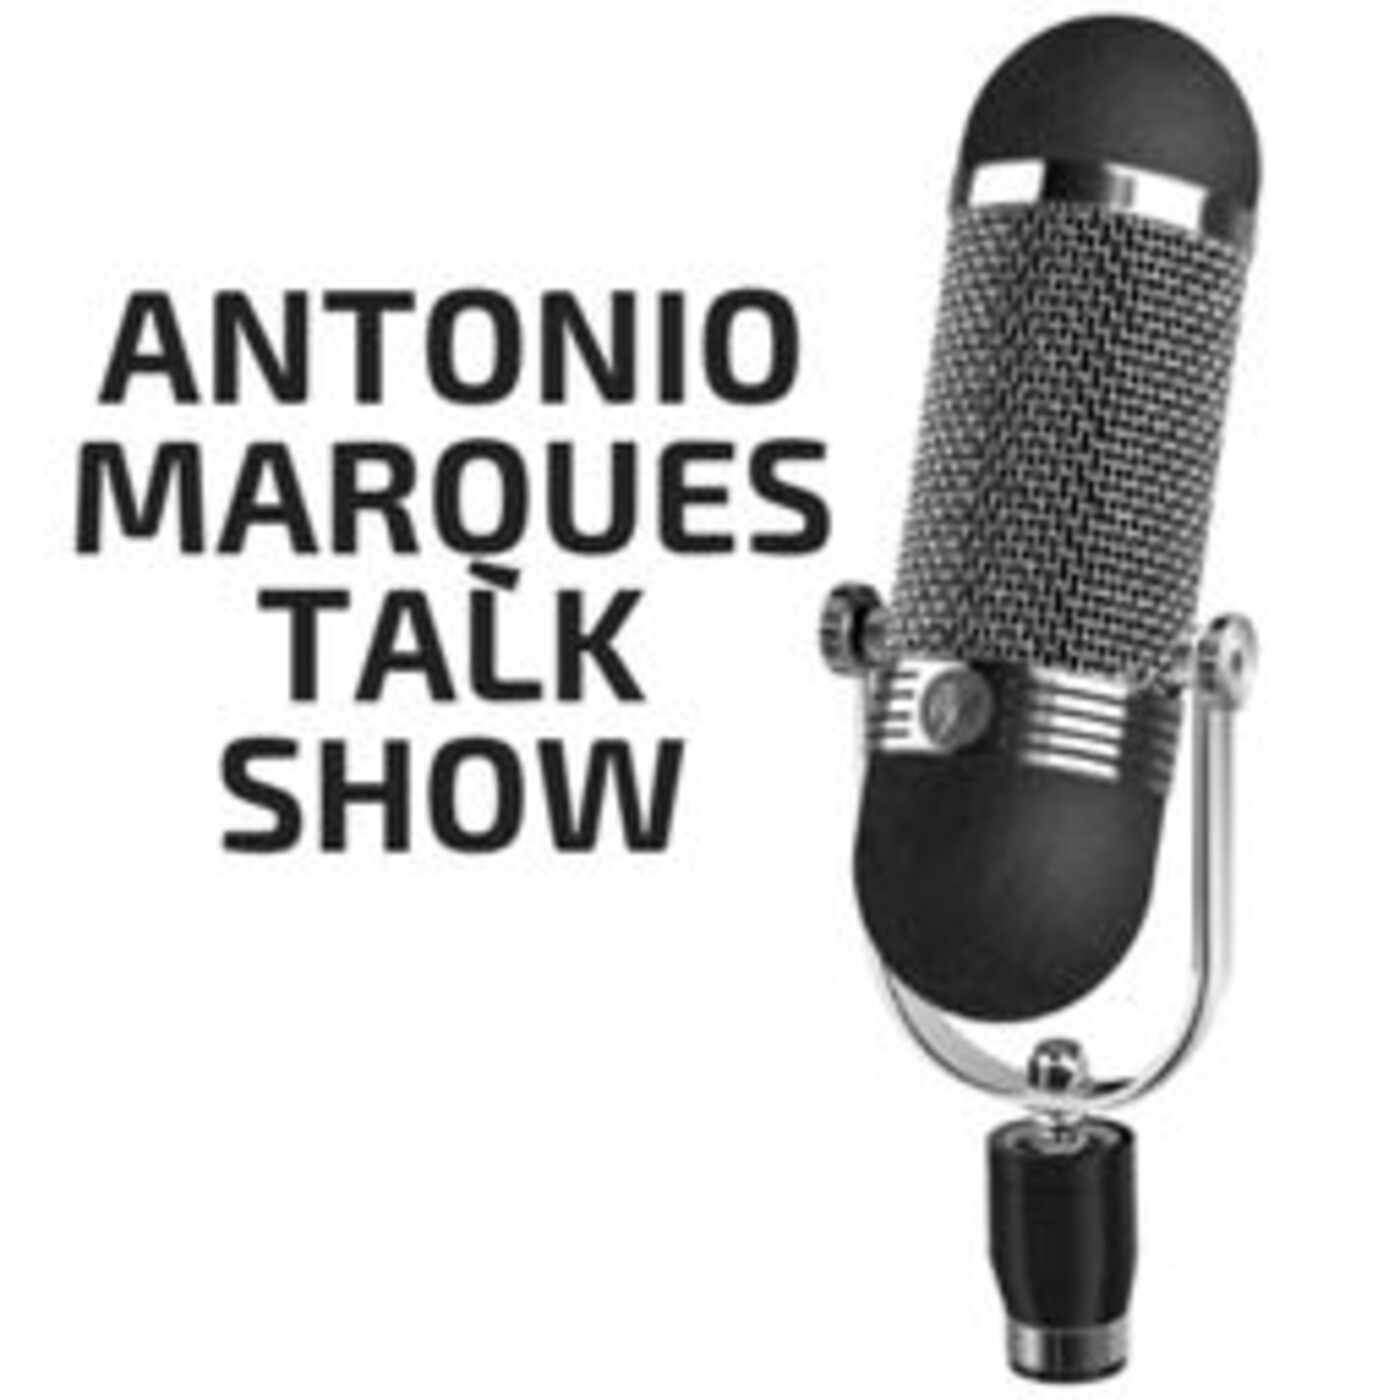 Último episodio del podcast Antonio Marques Talk Show